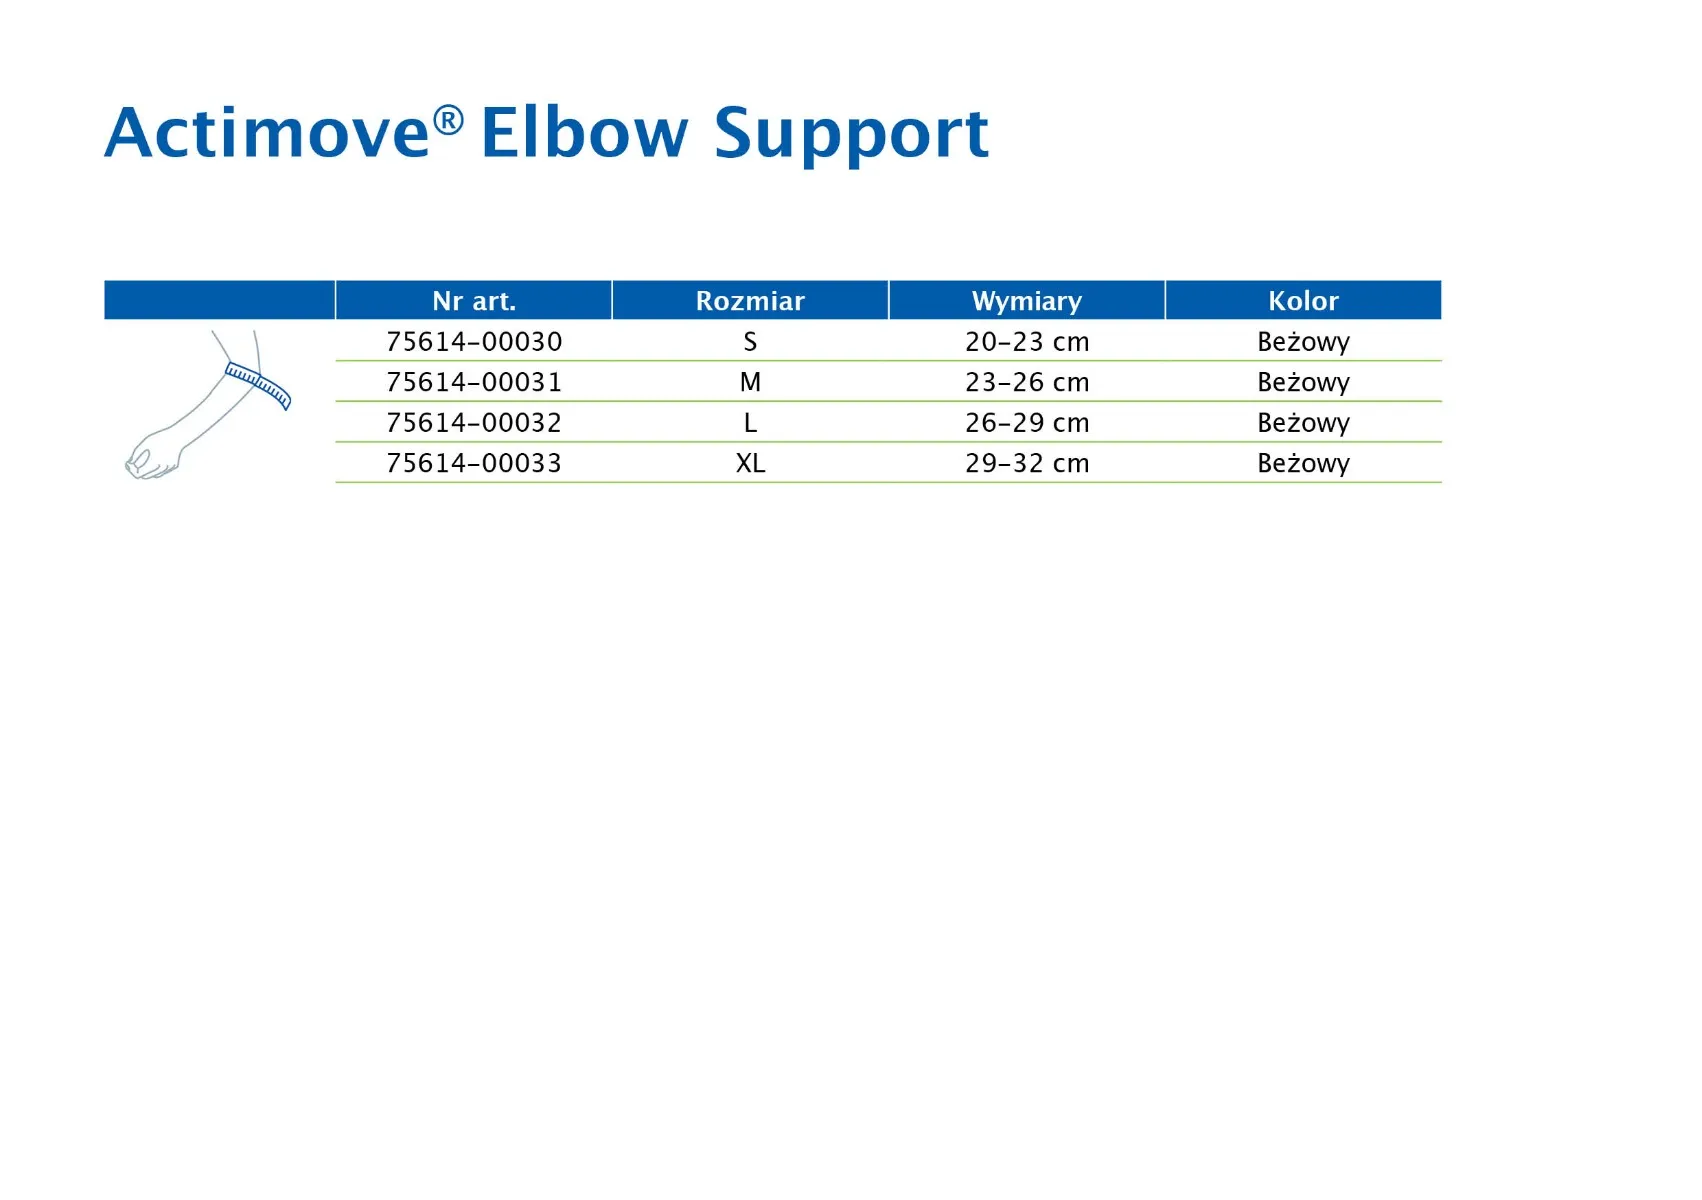 Actimove® Everyday Supports opaska na łokieć beżowa rozmiar M, 1 szt. 